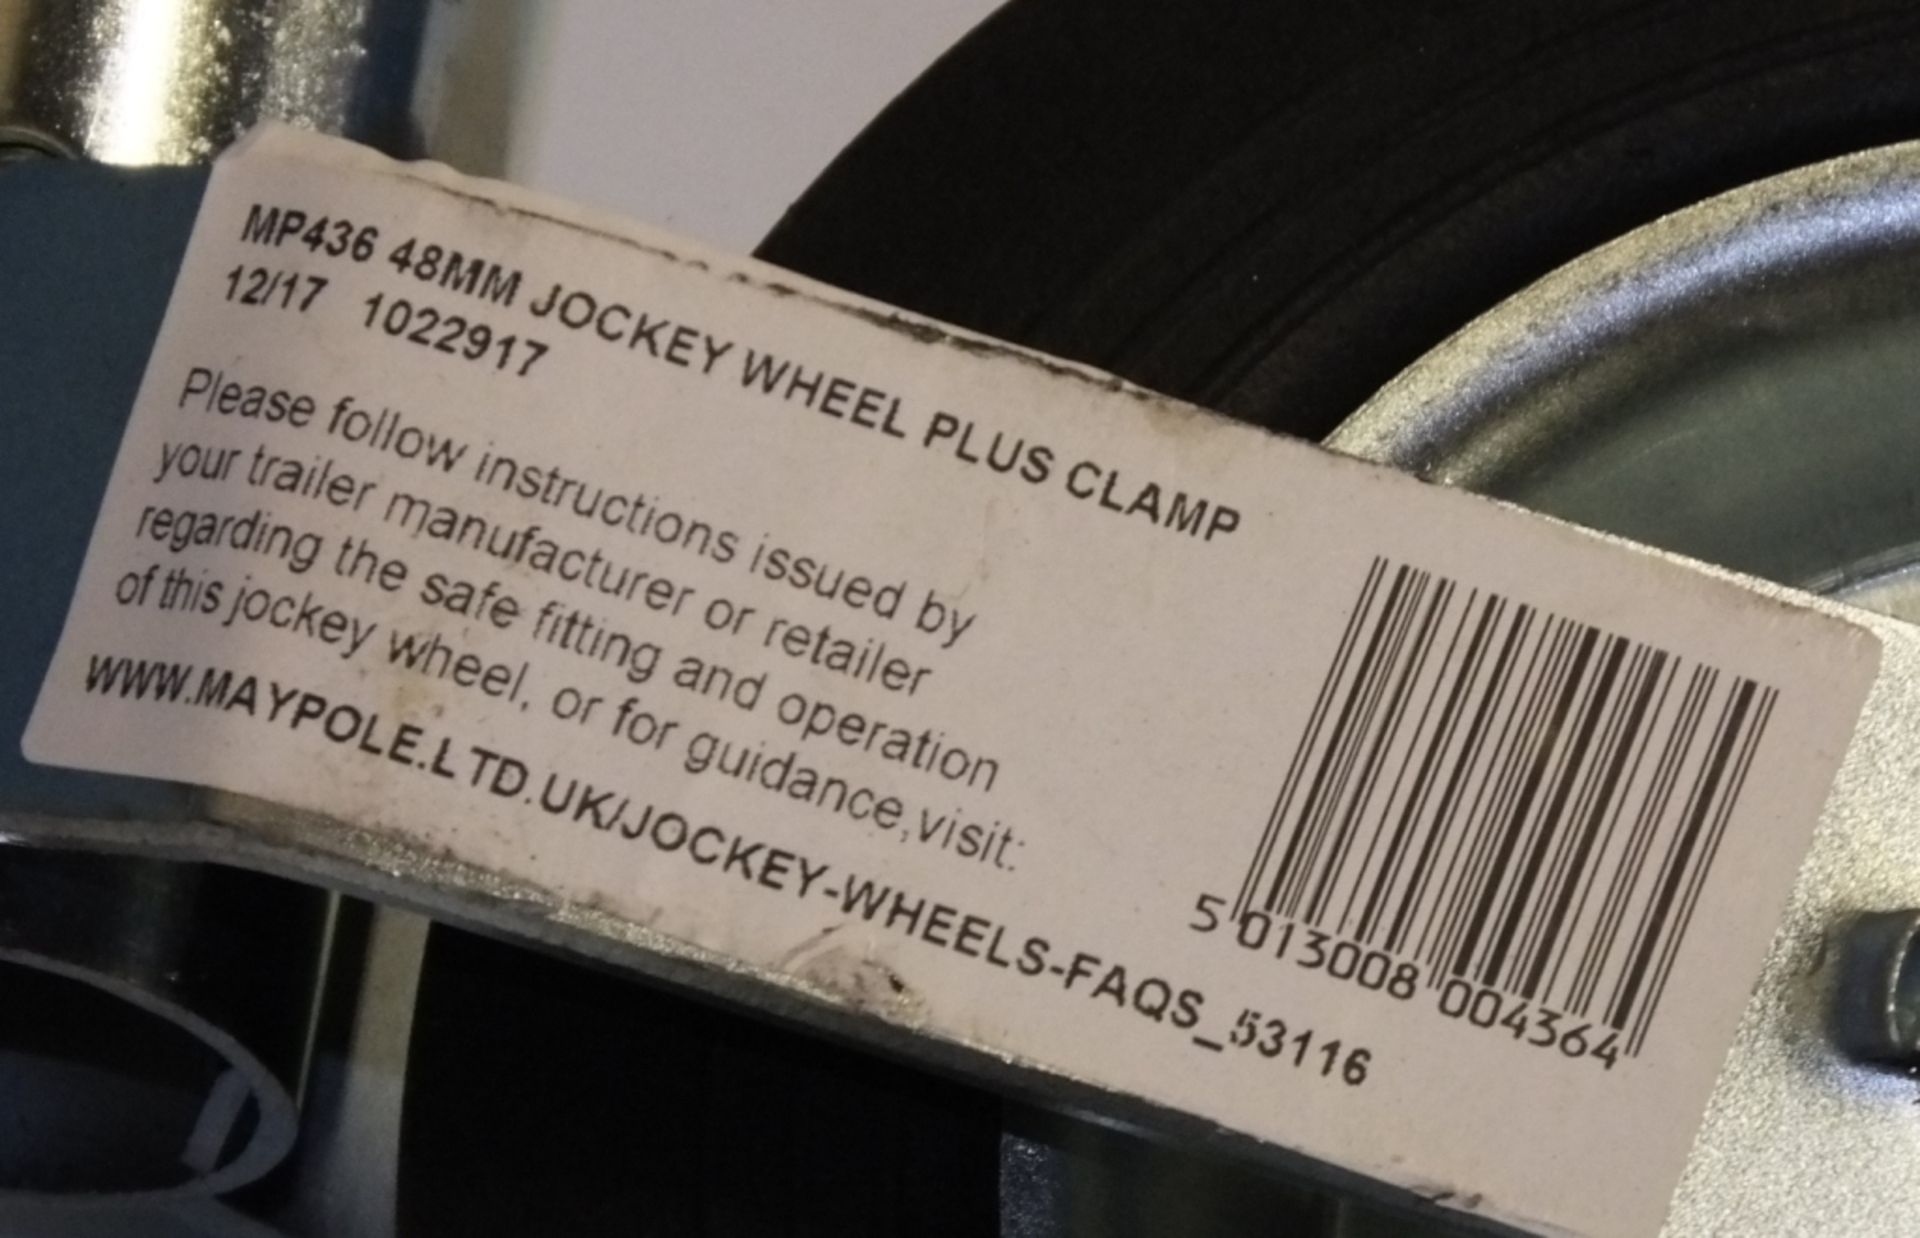 Jockey wheel plus clamp - MP436 - 48mm - Image 3 of 3